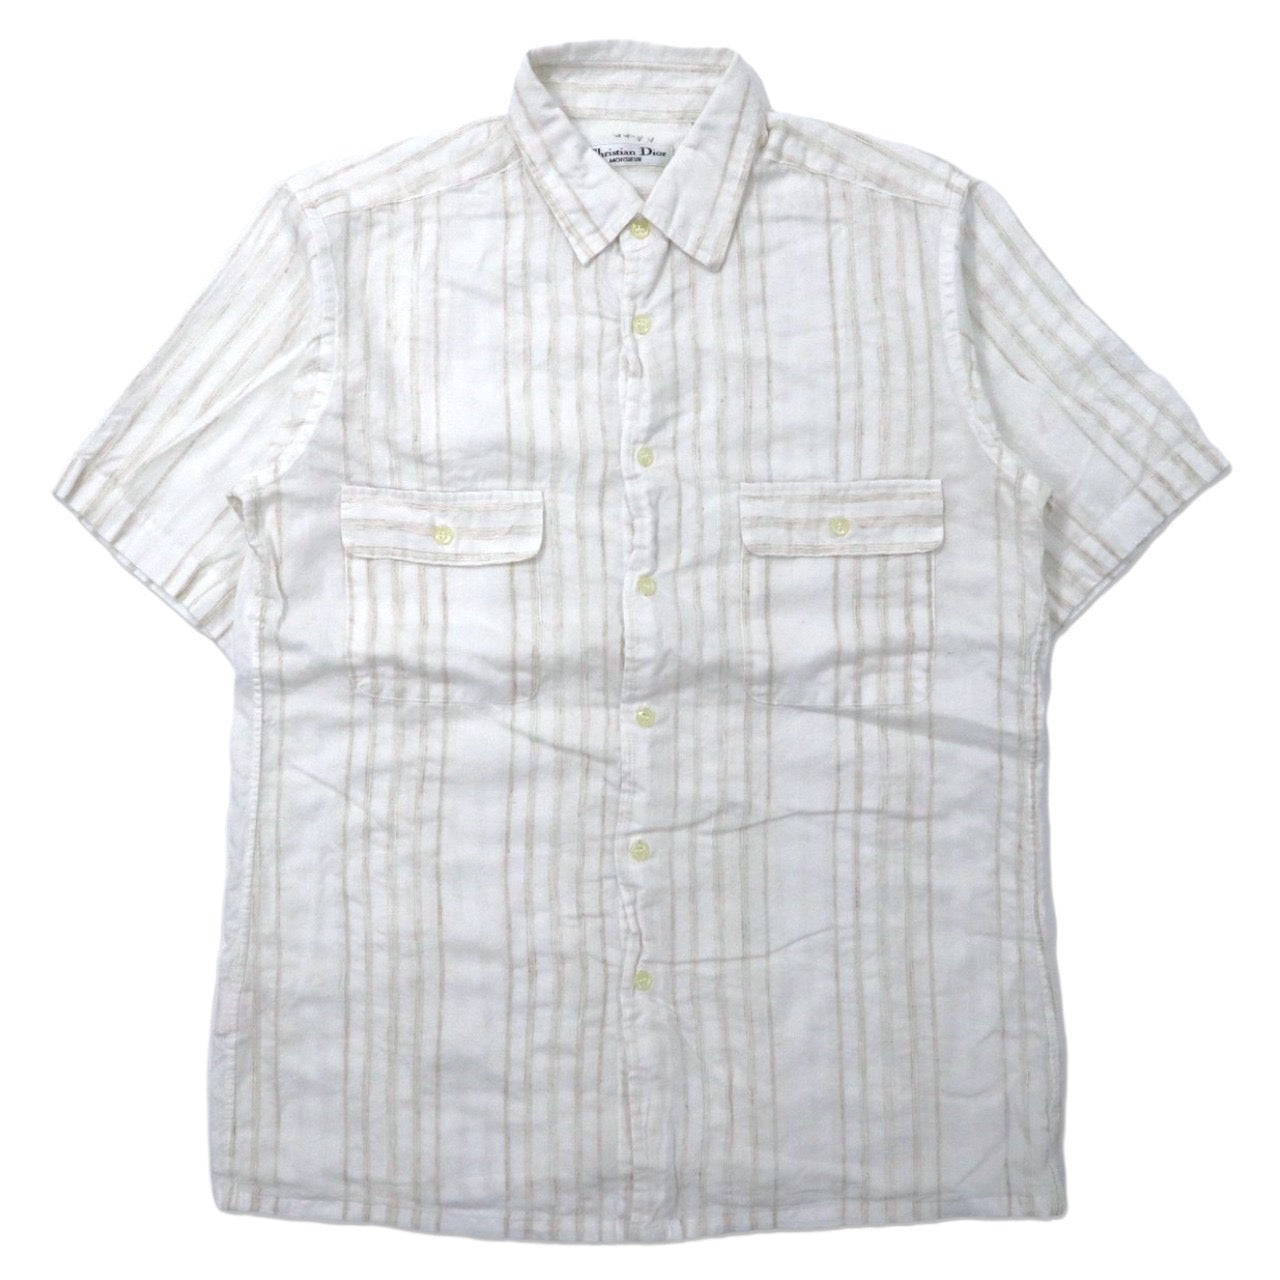 Christian Dior Short Sleeve Gauze Shirt L White Striped Cotton